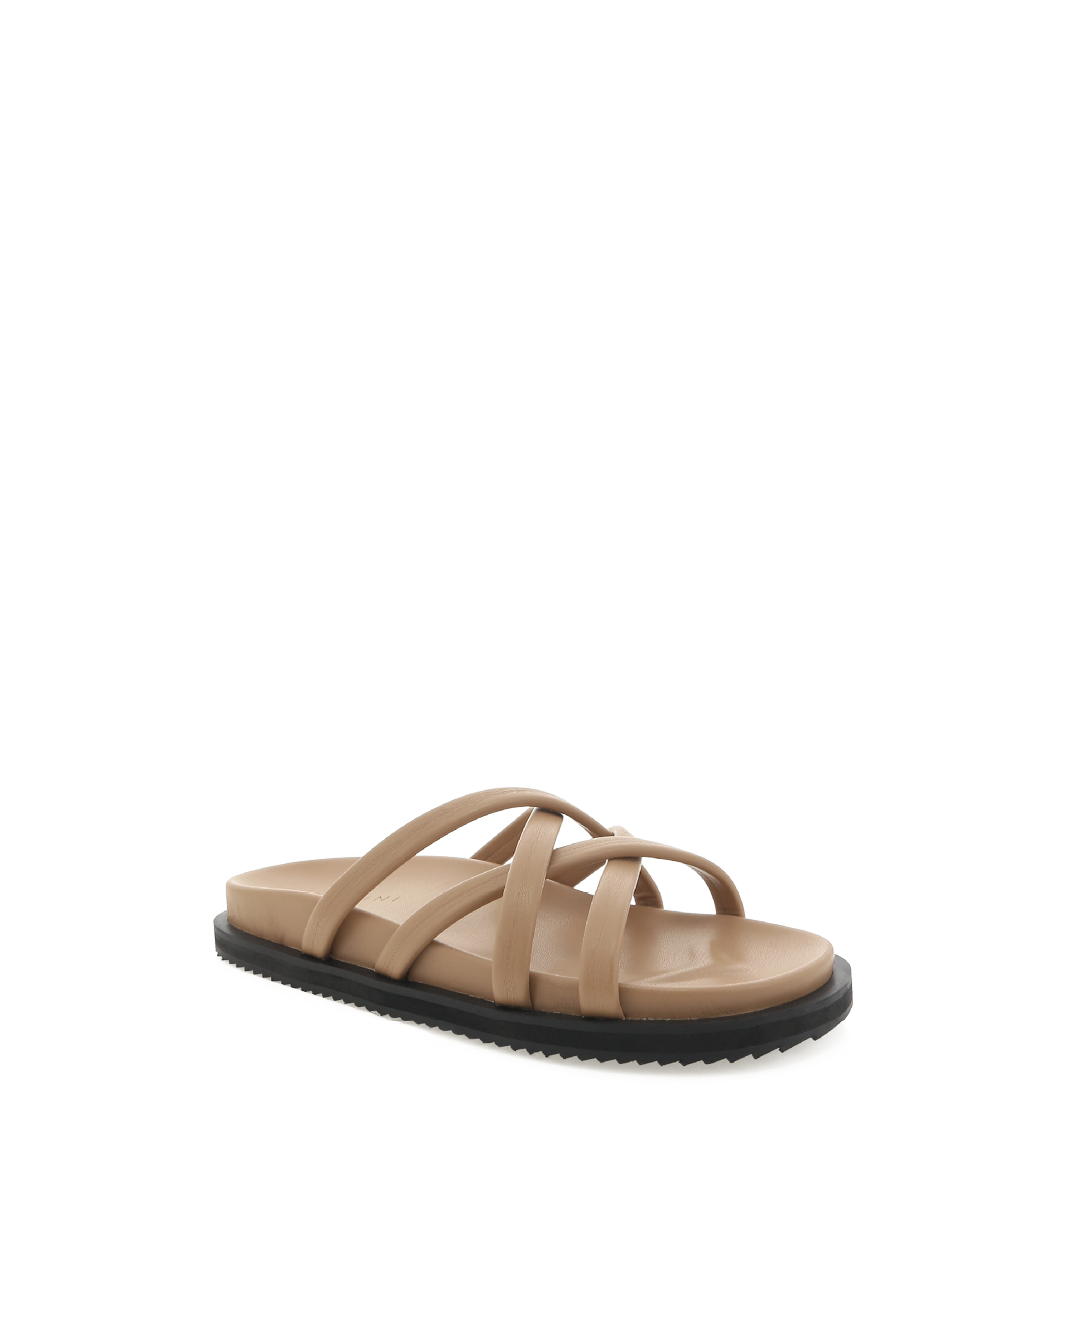 TAMSIN - CLAY-Sandals-Billini-Billini